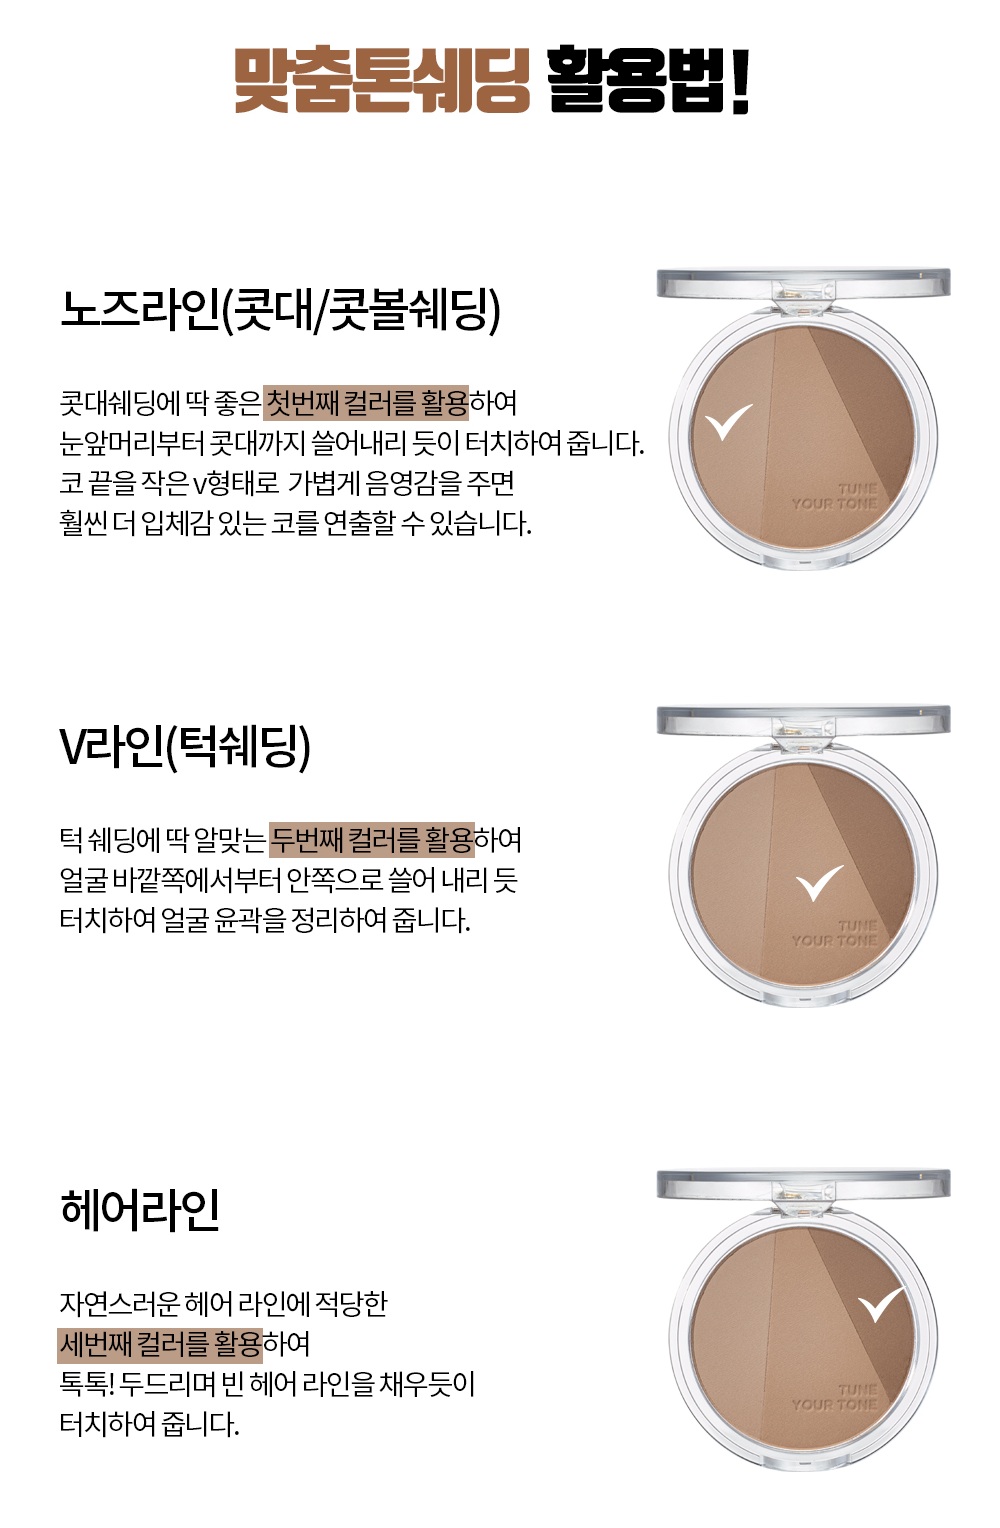 Holika Holika Tone Tuning Shading korean cosmetic makeup product online shop malaysia China indonesia4